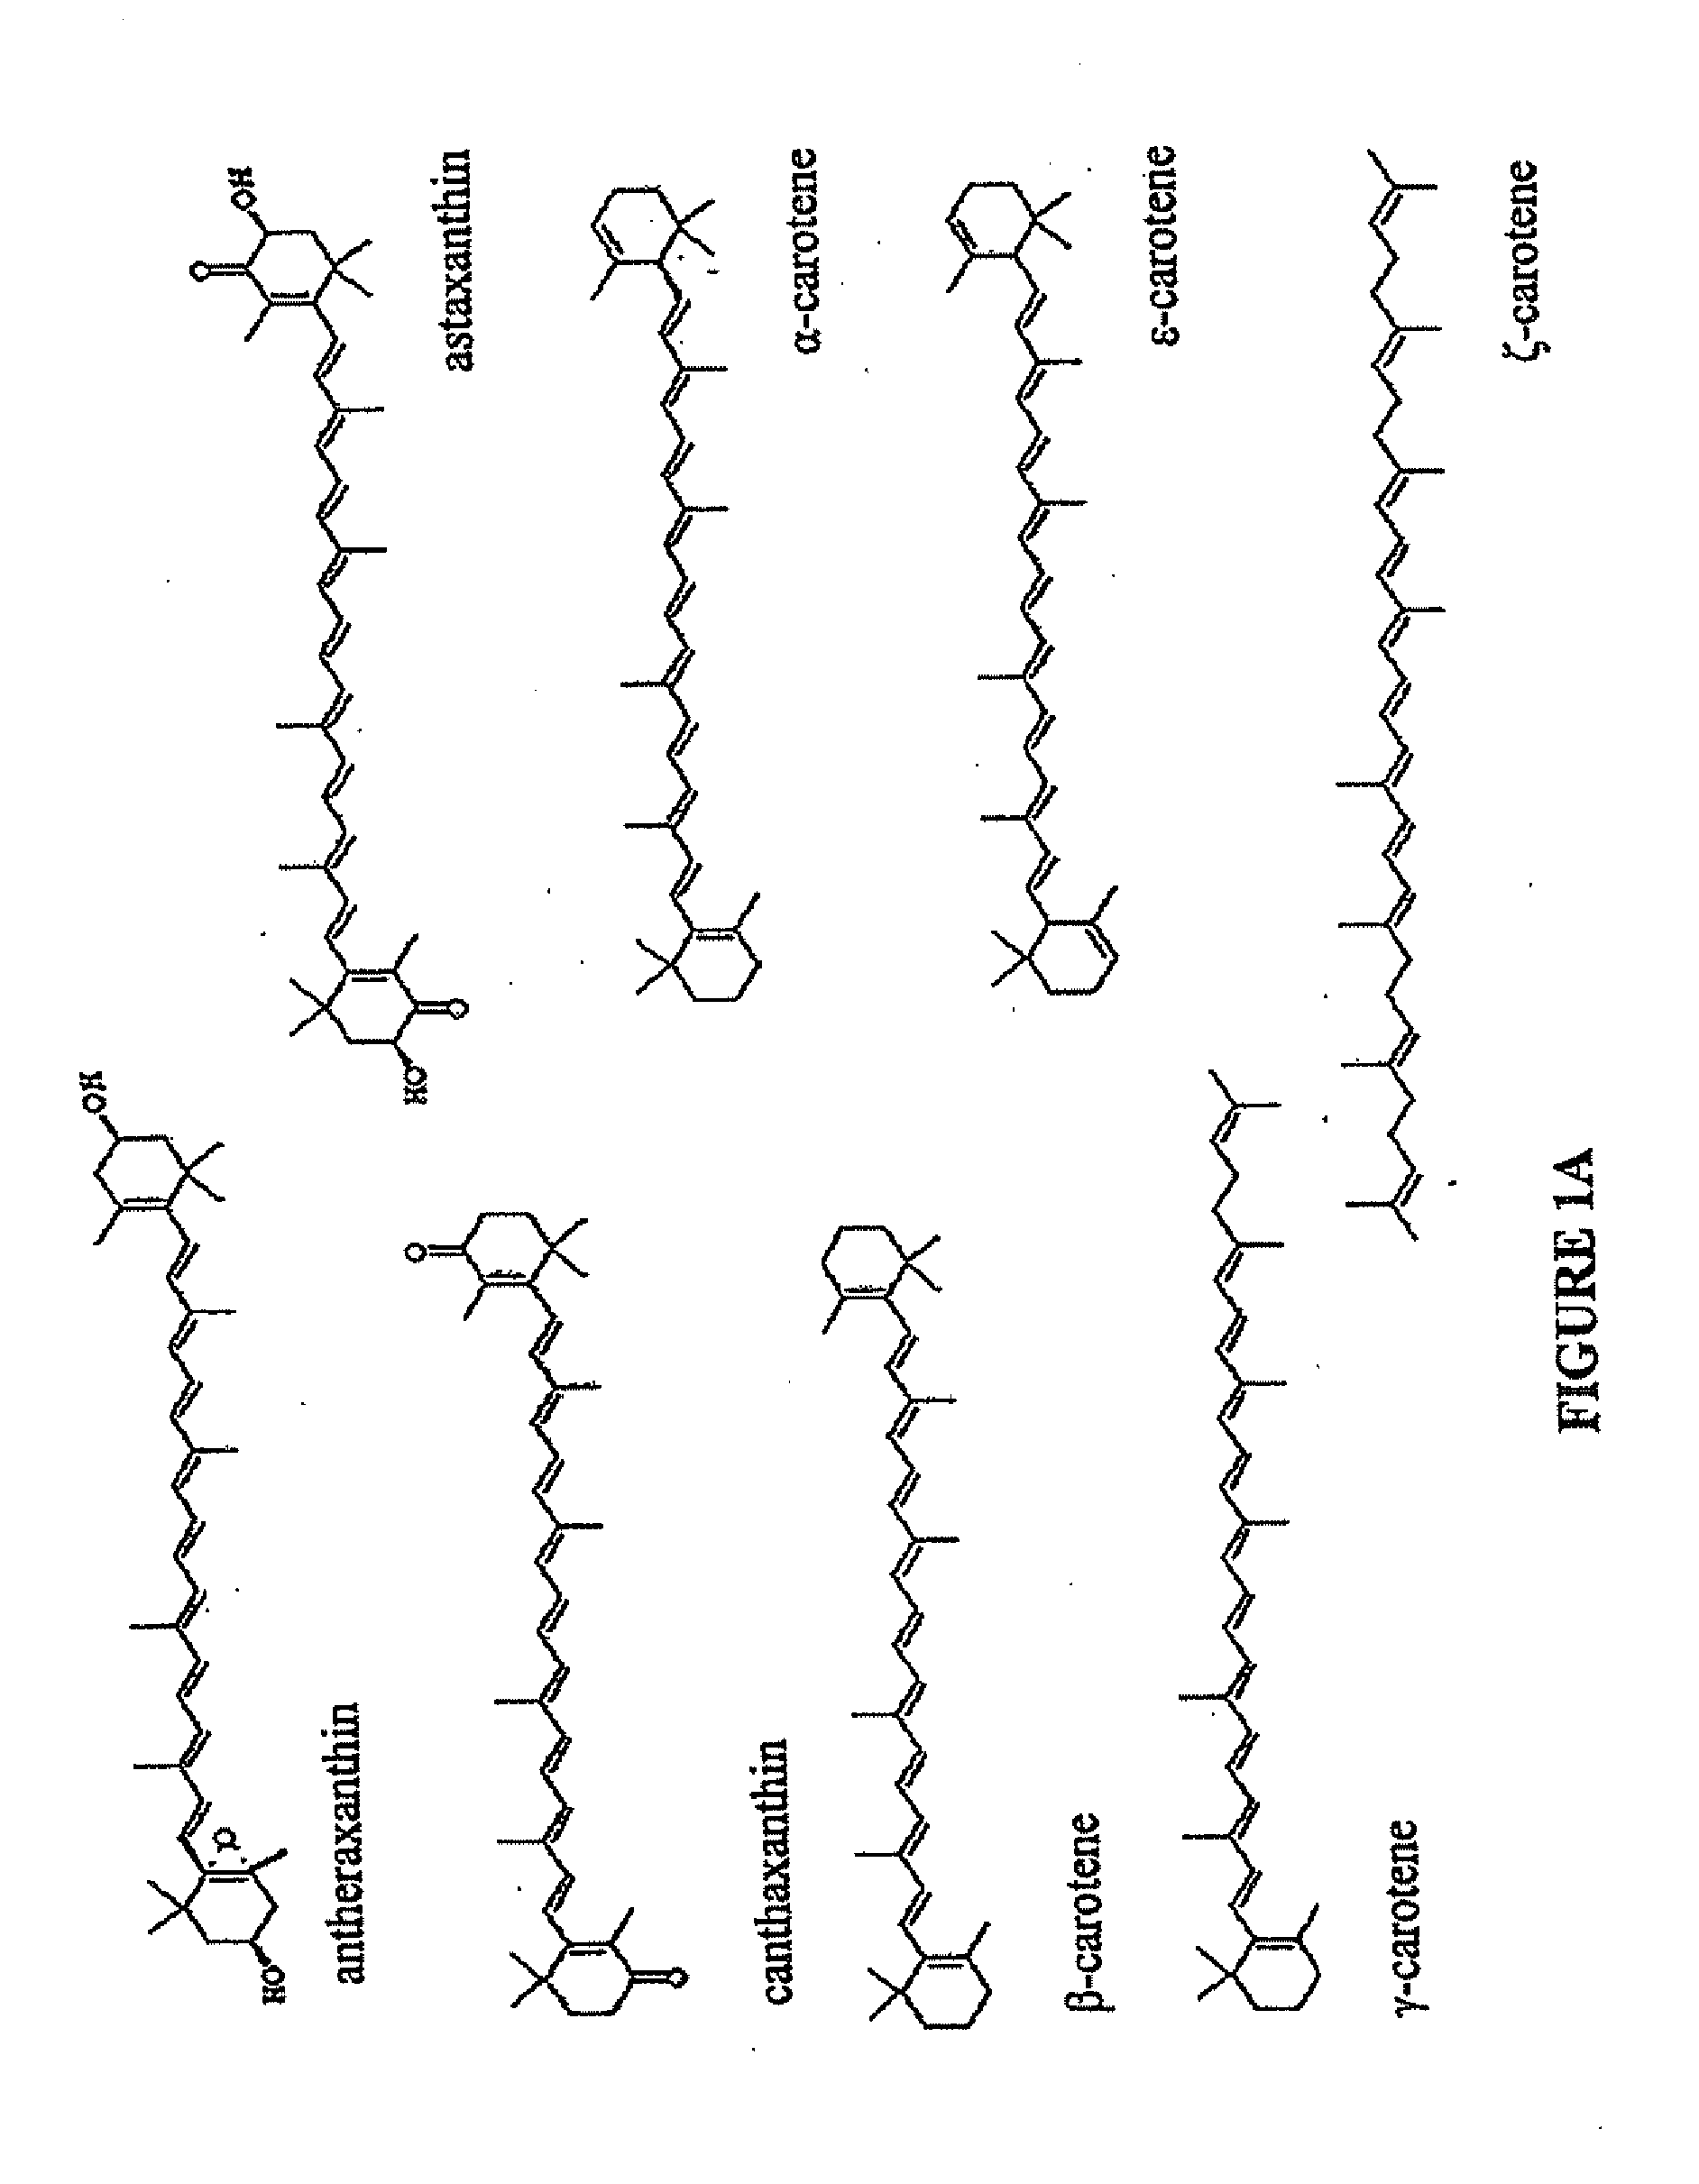 Production of carotenoids in oleaginous yeast and fungi